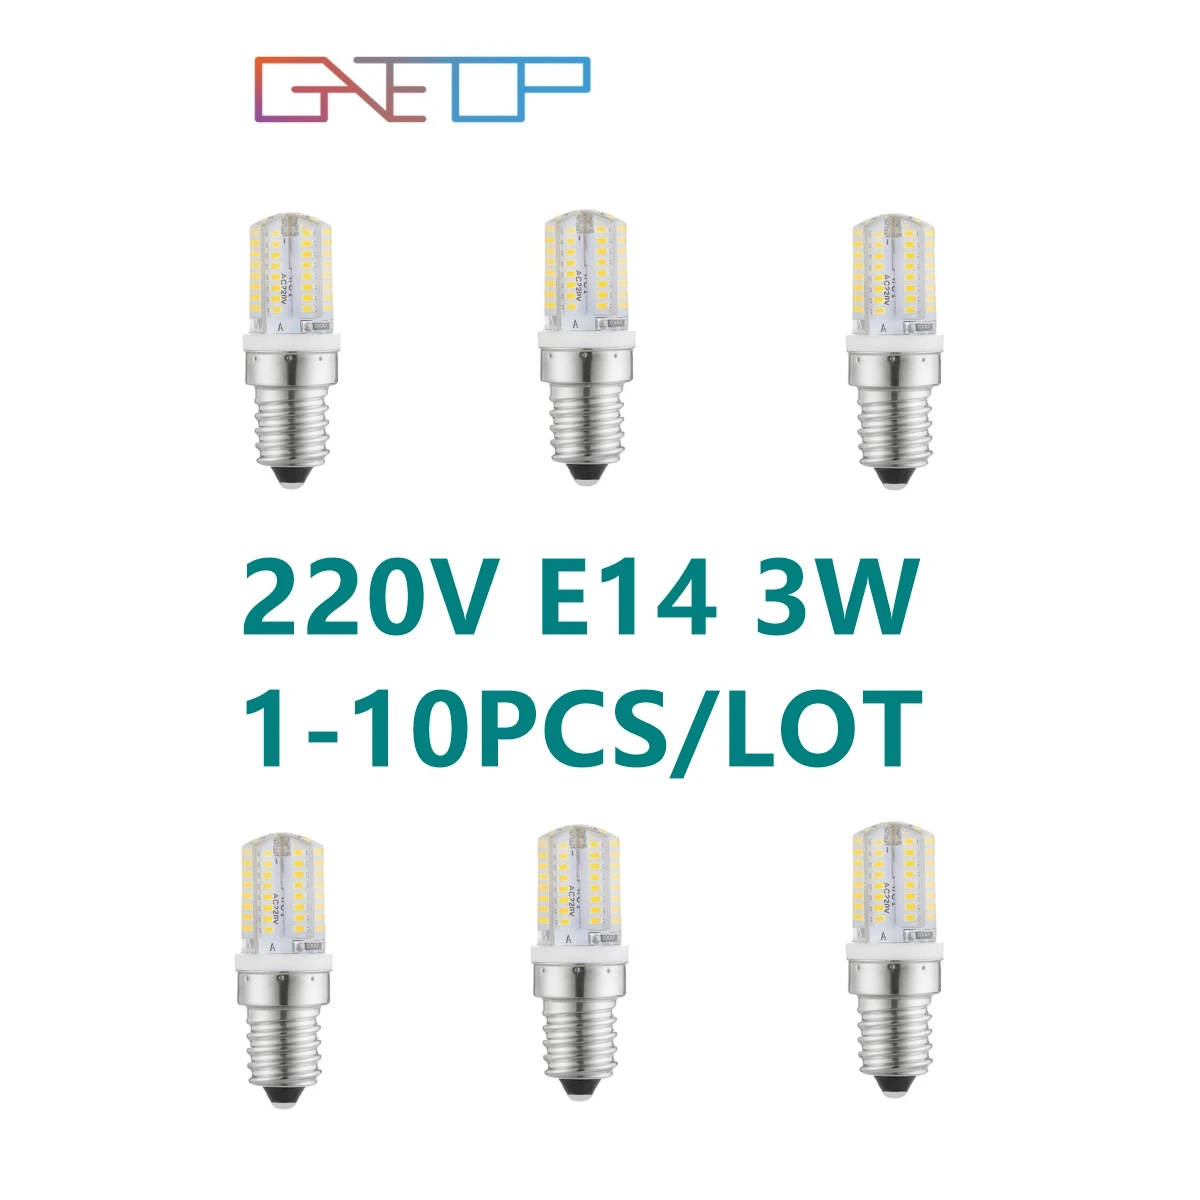 

1-10PCS LED Mini Corn Bulb silica gel material 64 LEDs 3W AC 220V E14 Lampada LED Lamp Chandelier Candle LED Light Bombilla